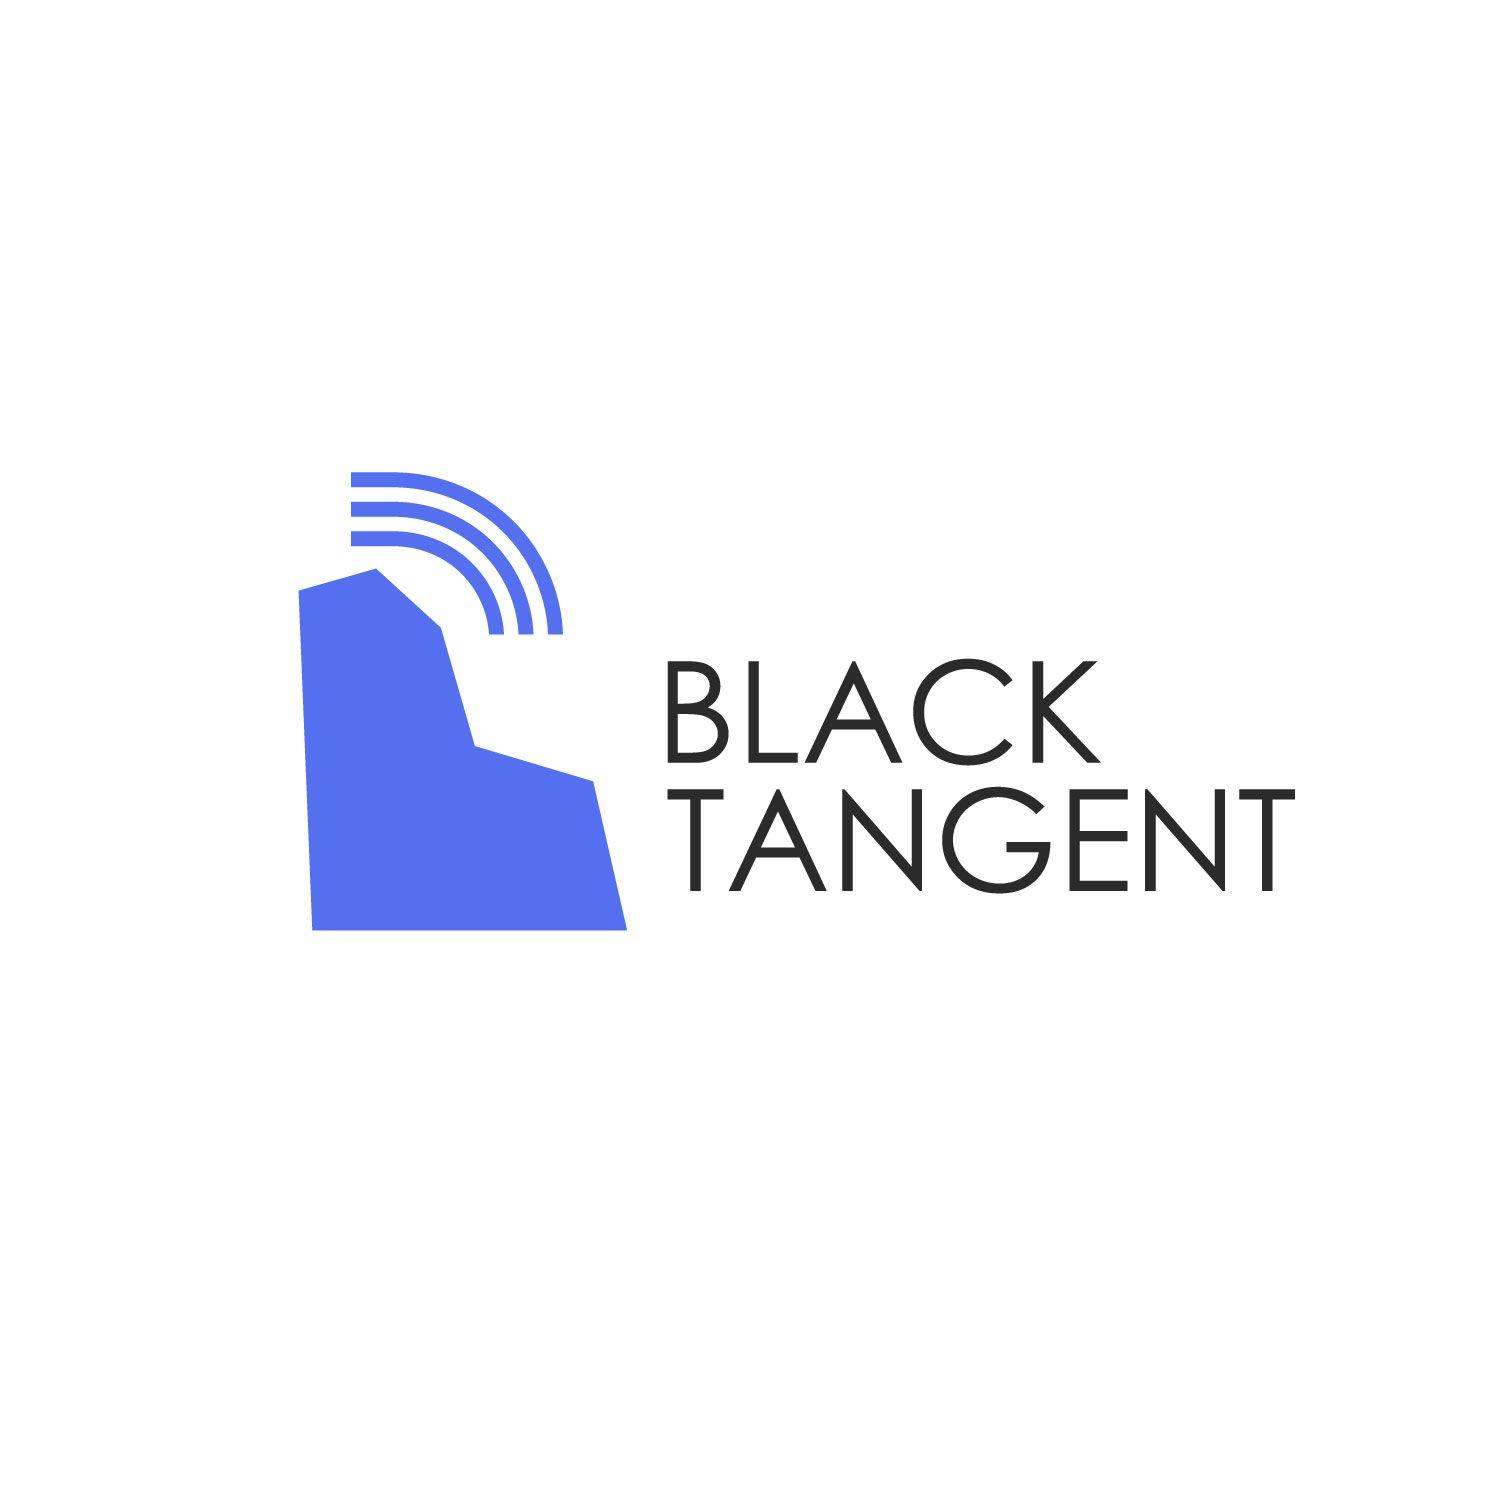 Tangent Logo - Modern, Professional, Software Development Logo Design for Black ...